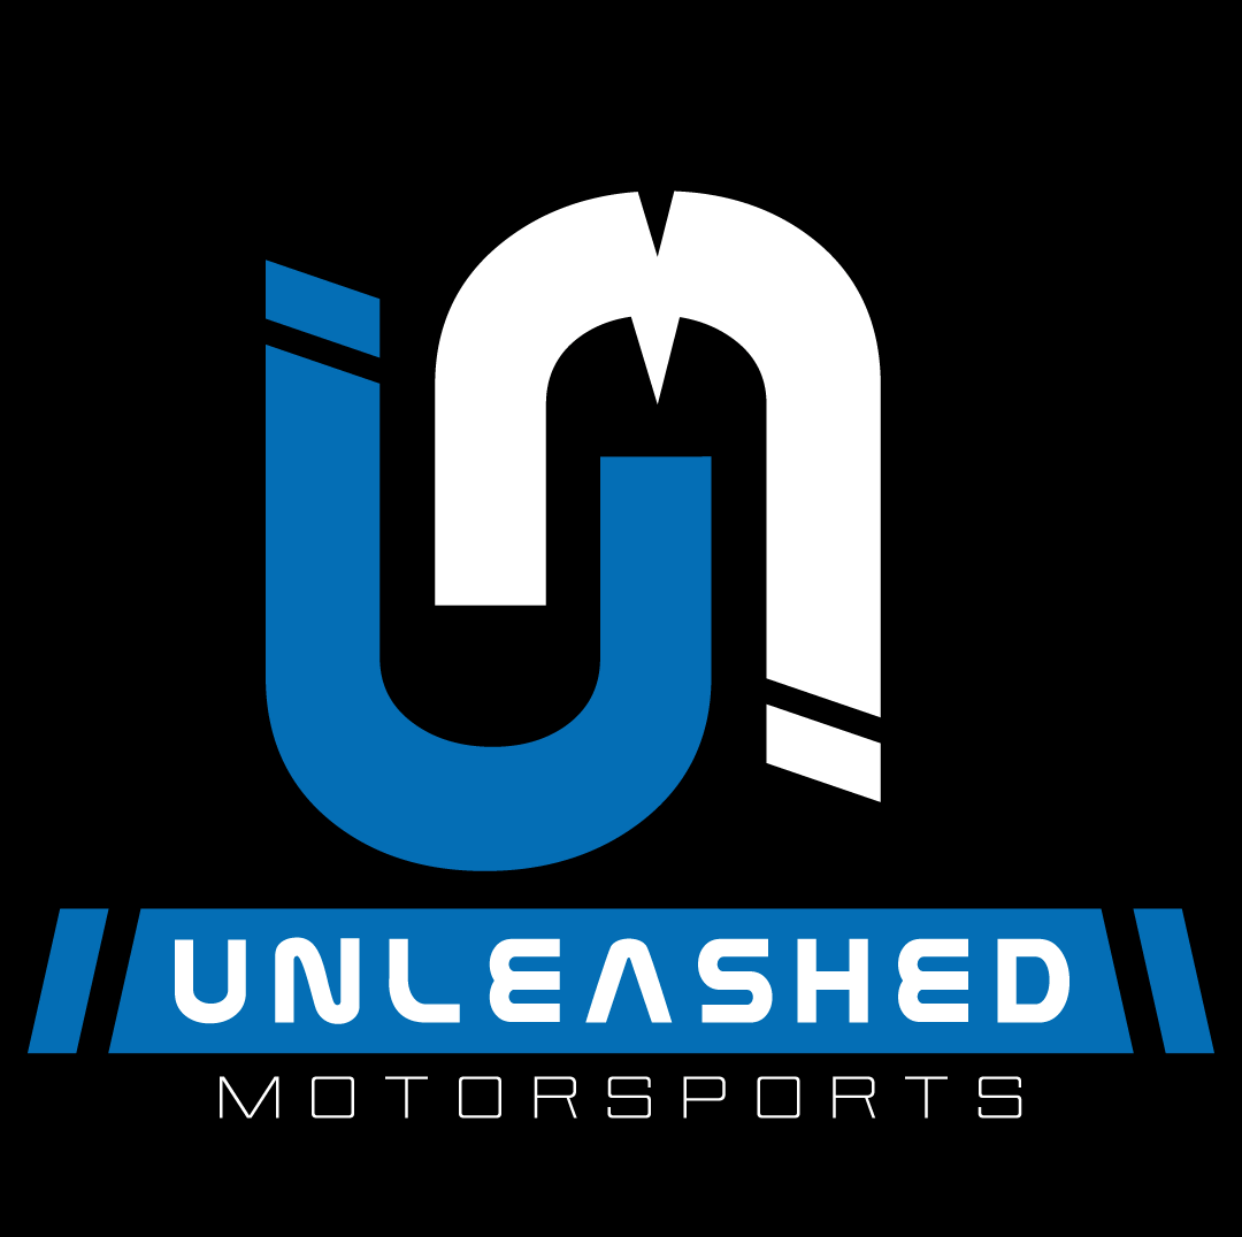 Unleashed motorsports